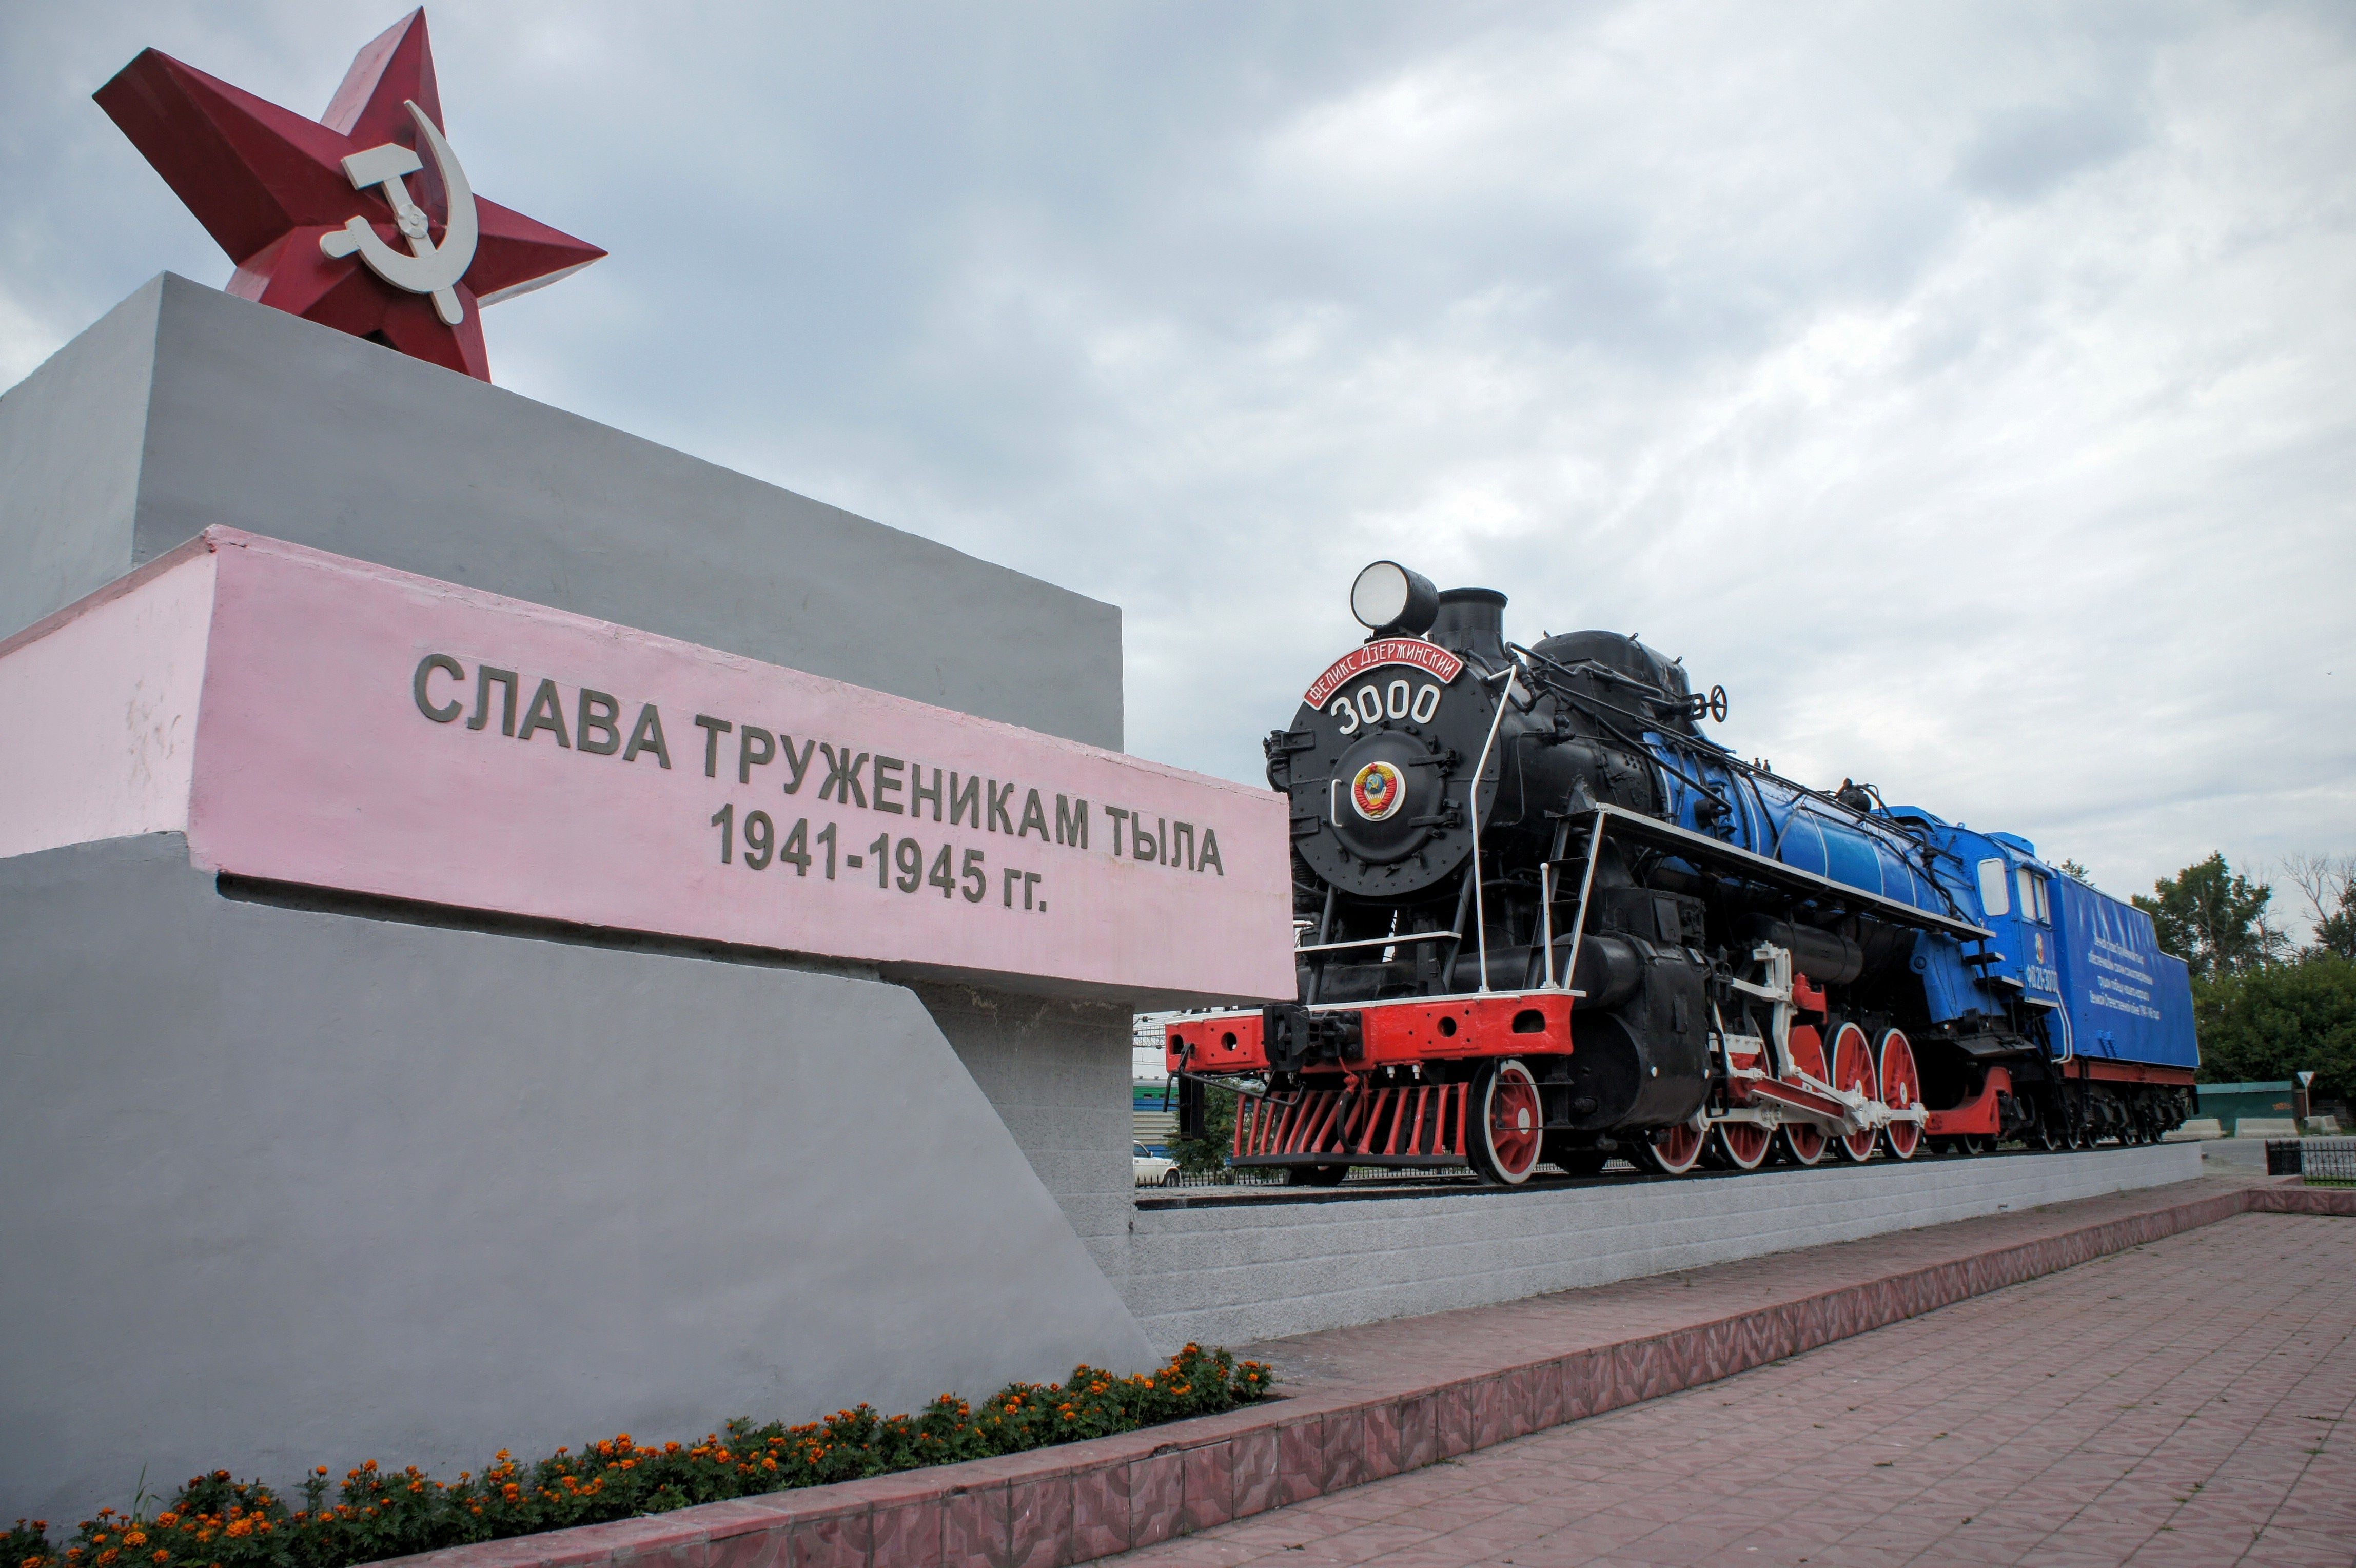 black blue and red cnaba tpykehnkam tbina train